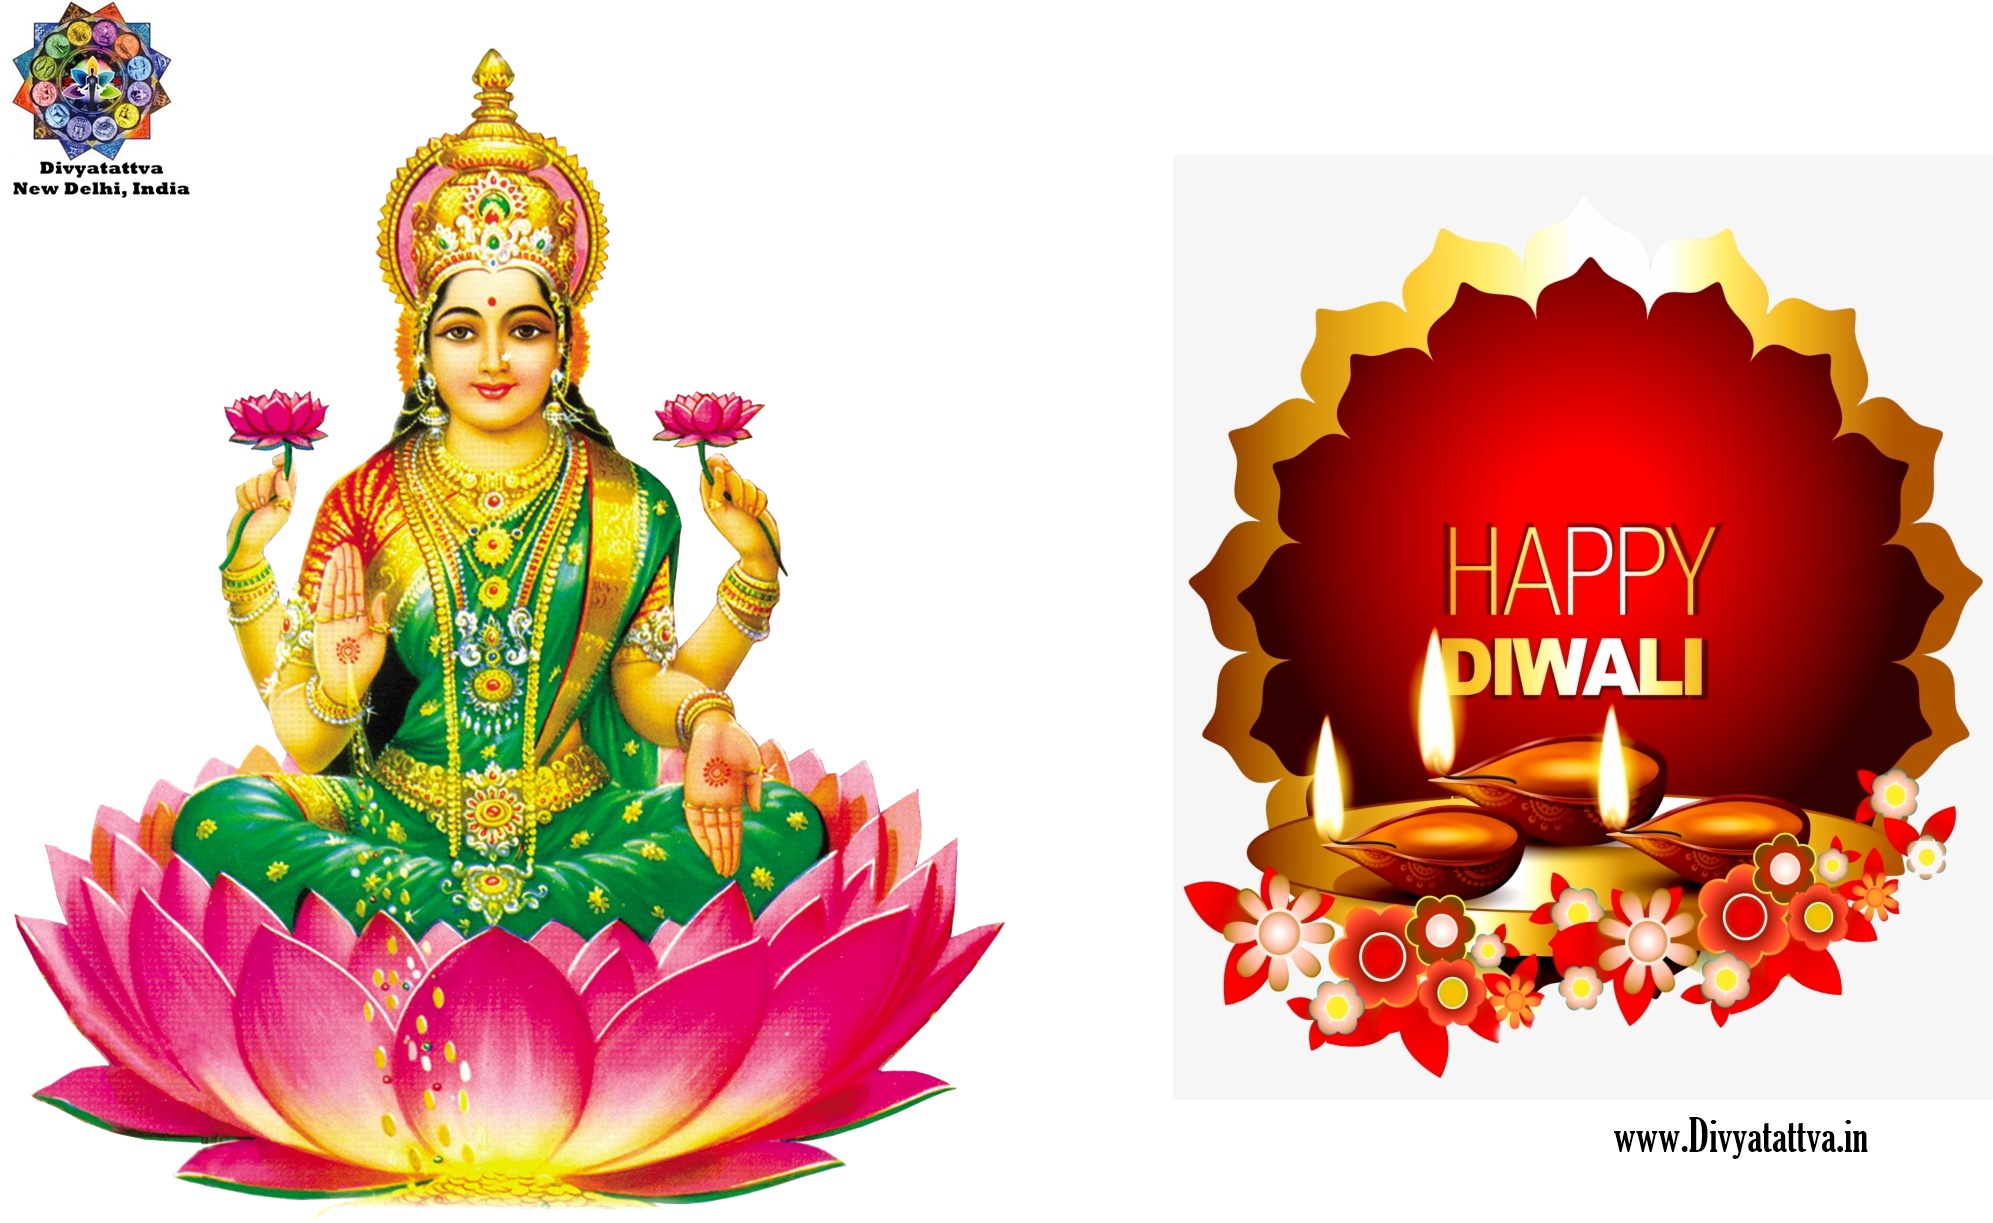 Happy Diwali Greetings HD Wallpapers Diwali Backgrounds Free Download